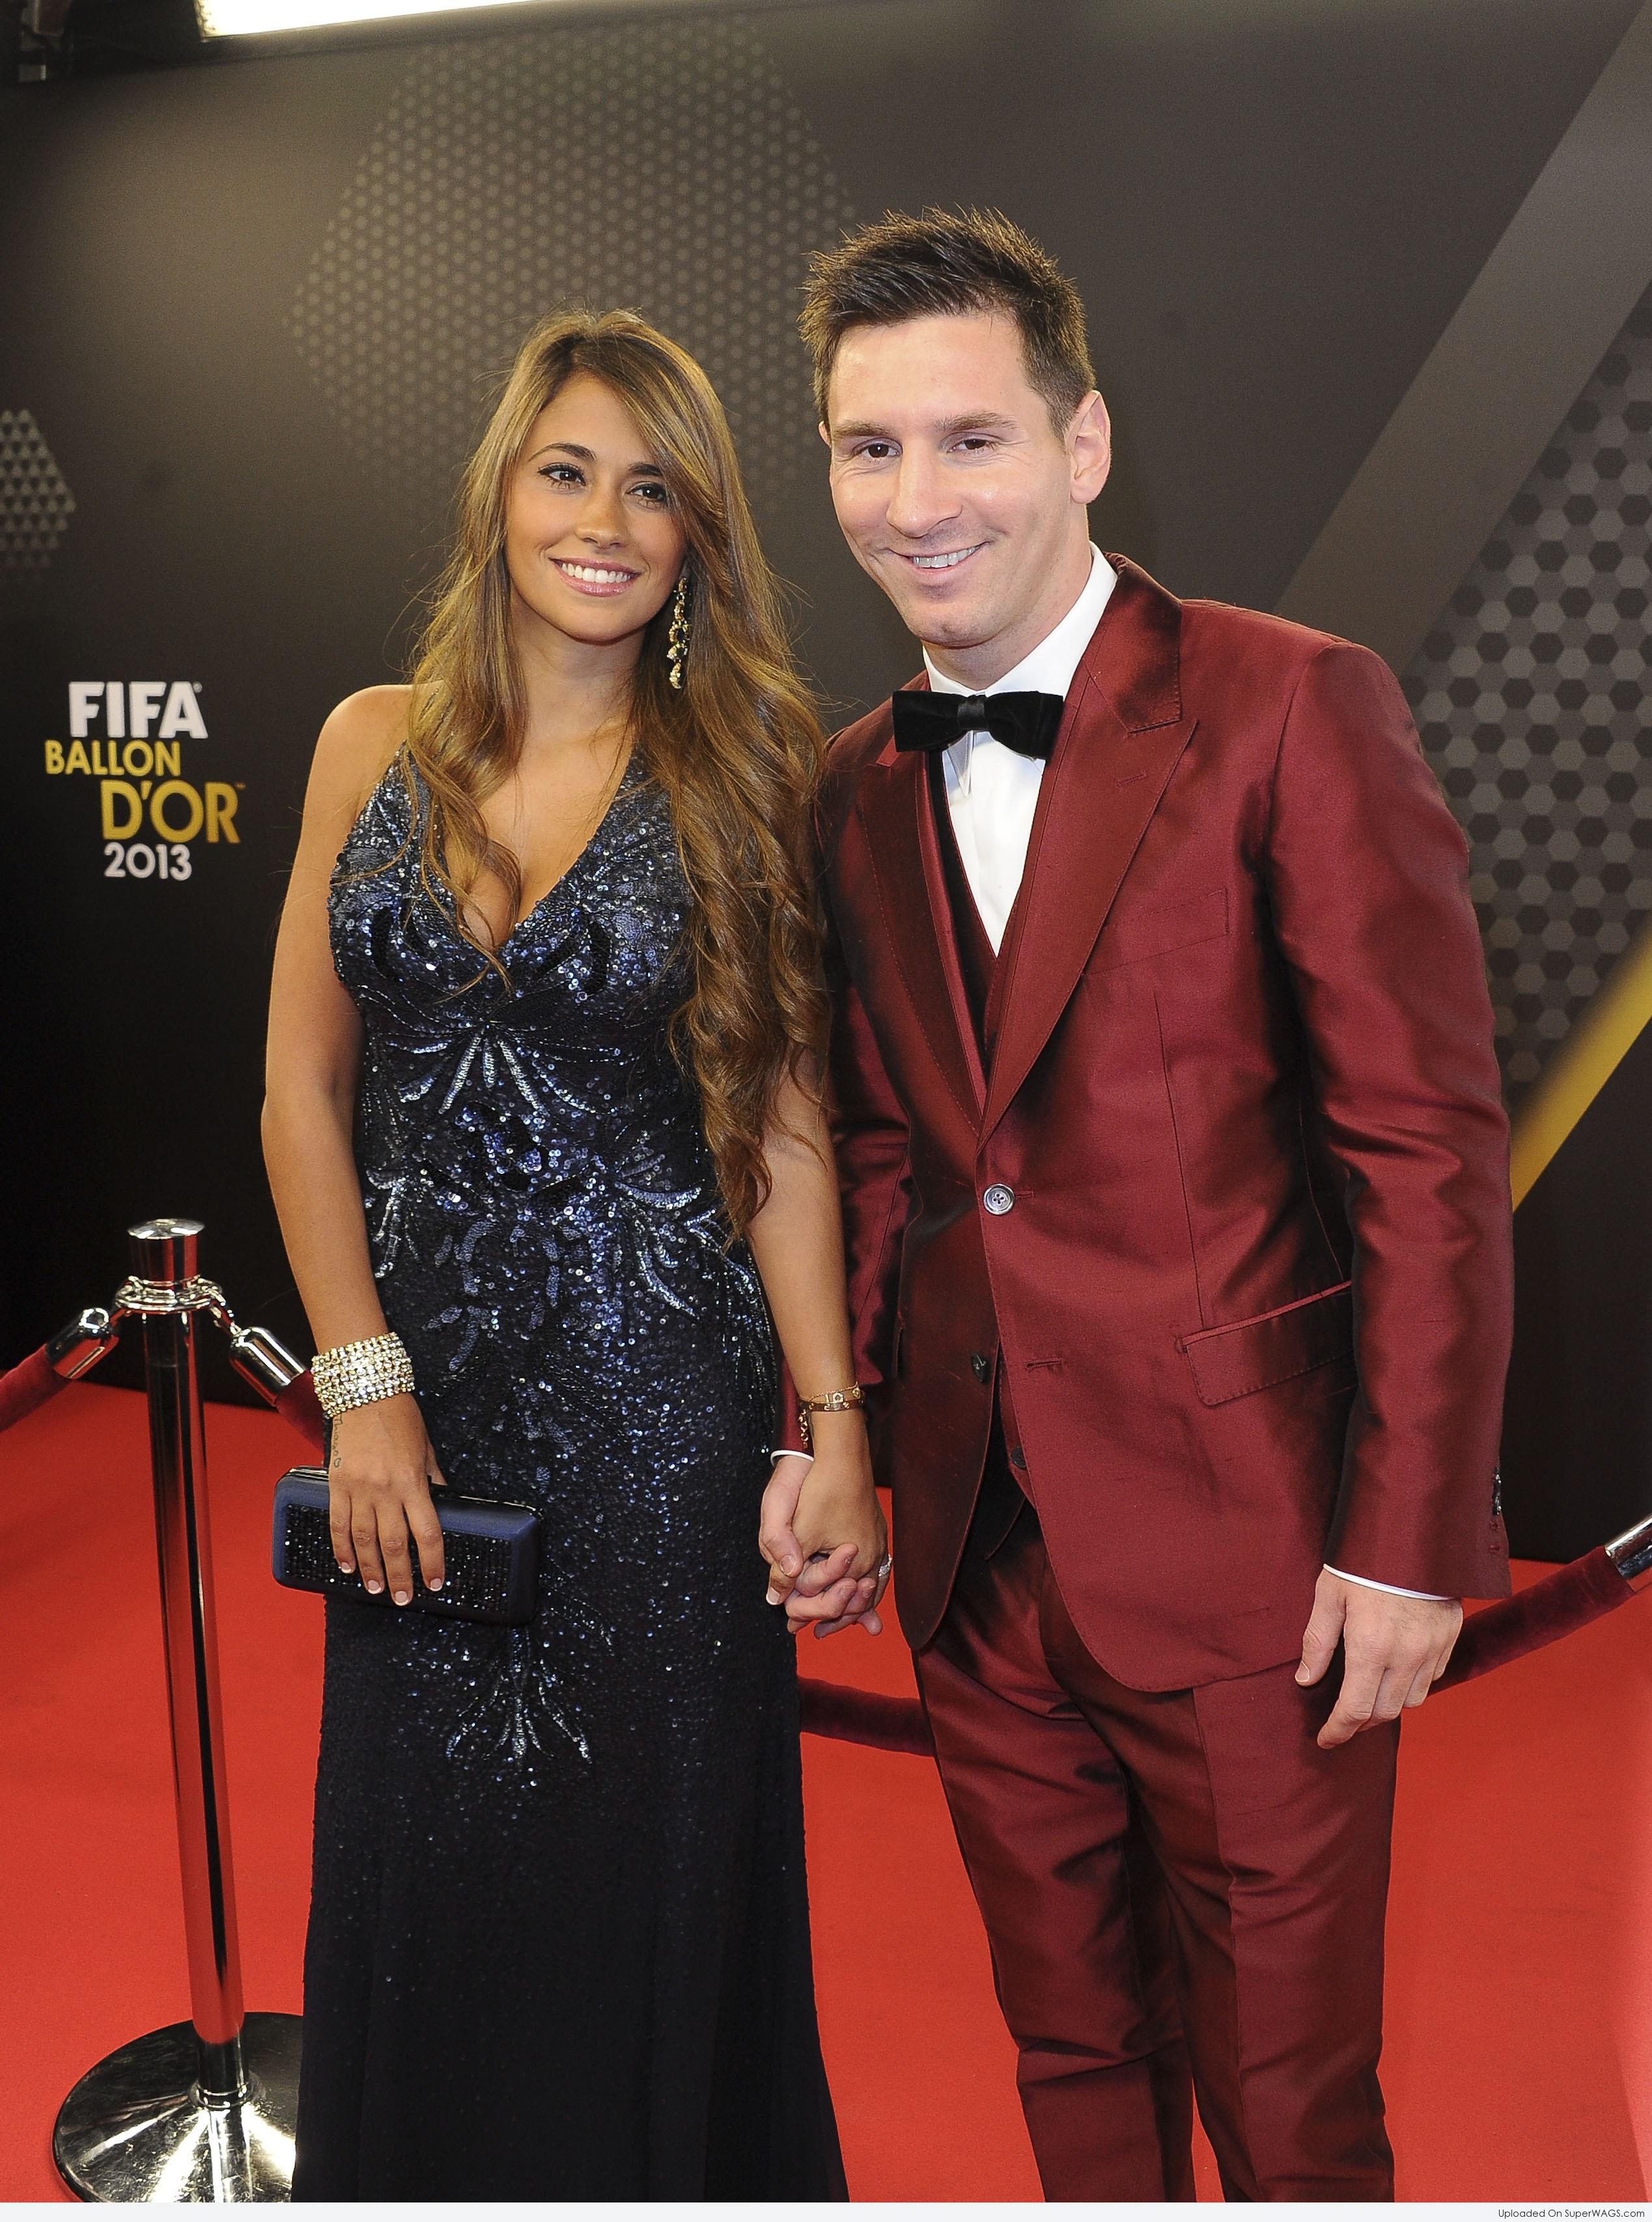 Antonella Roccuzzo Photos Photos Lionel Messi And His Wife Enjoy A ...